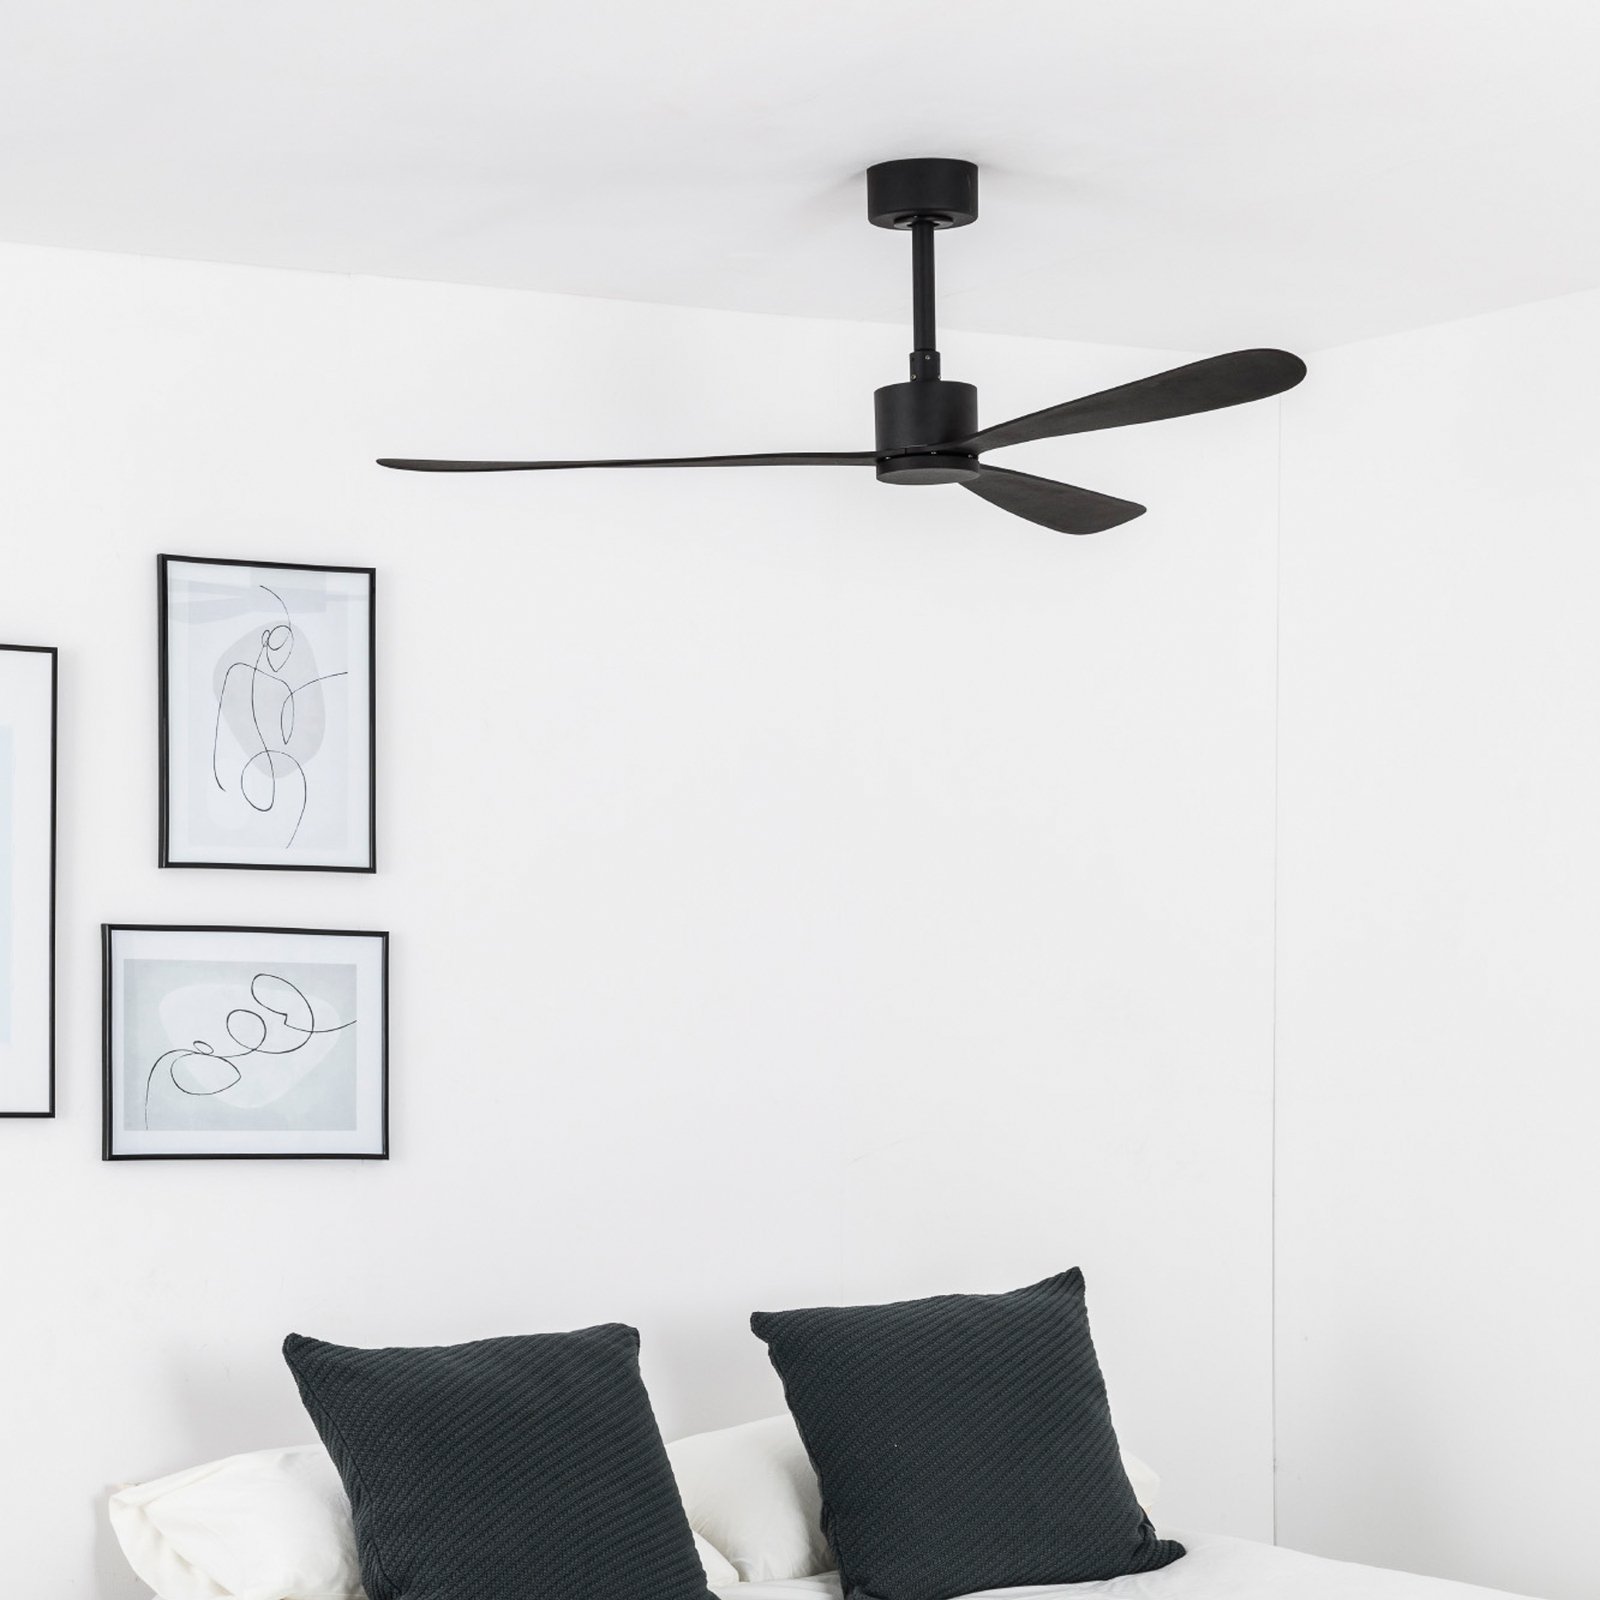 Amelia ceiling fan, DC motor, 3 blades, black